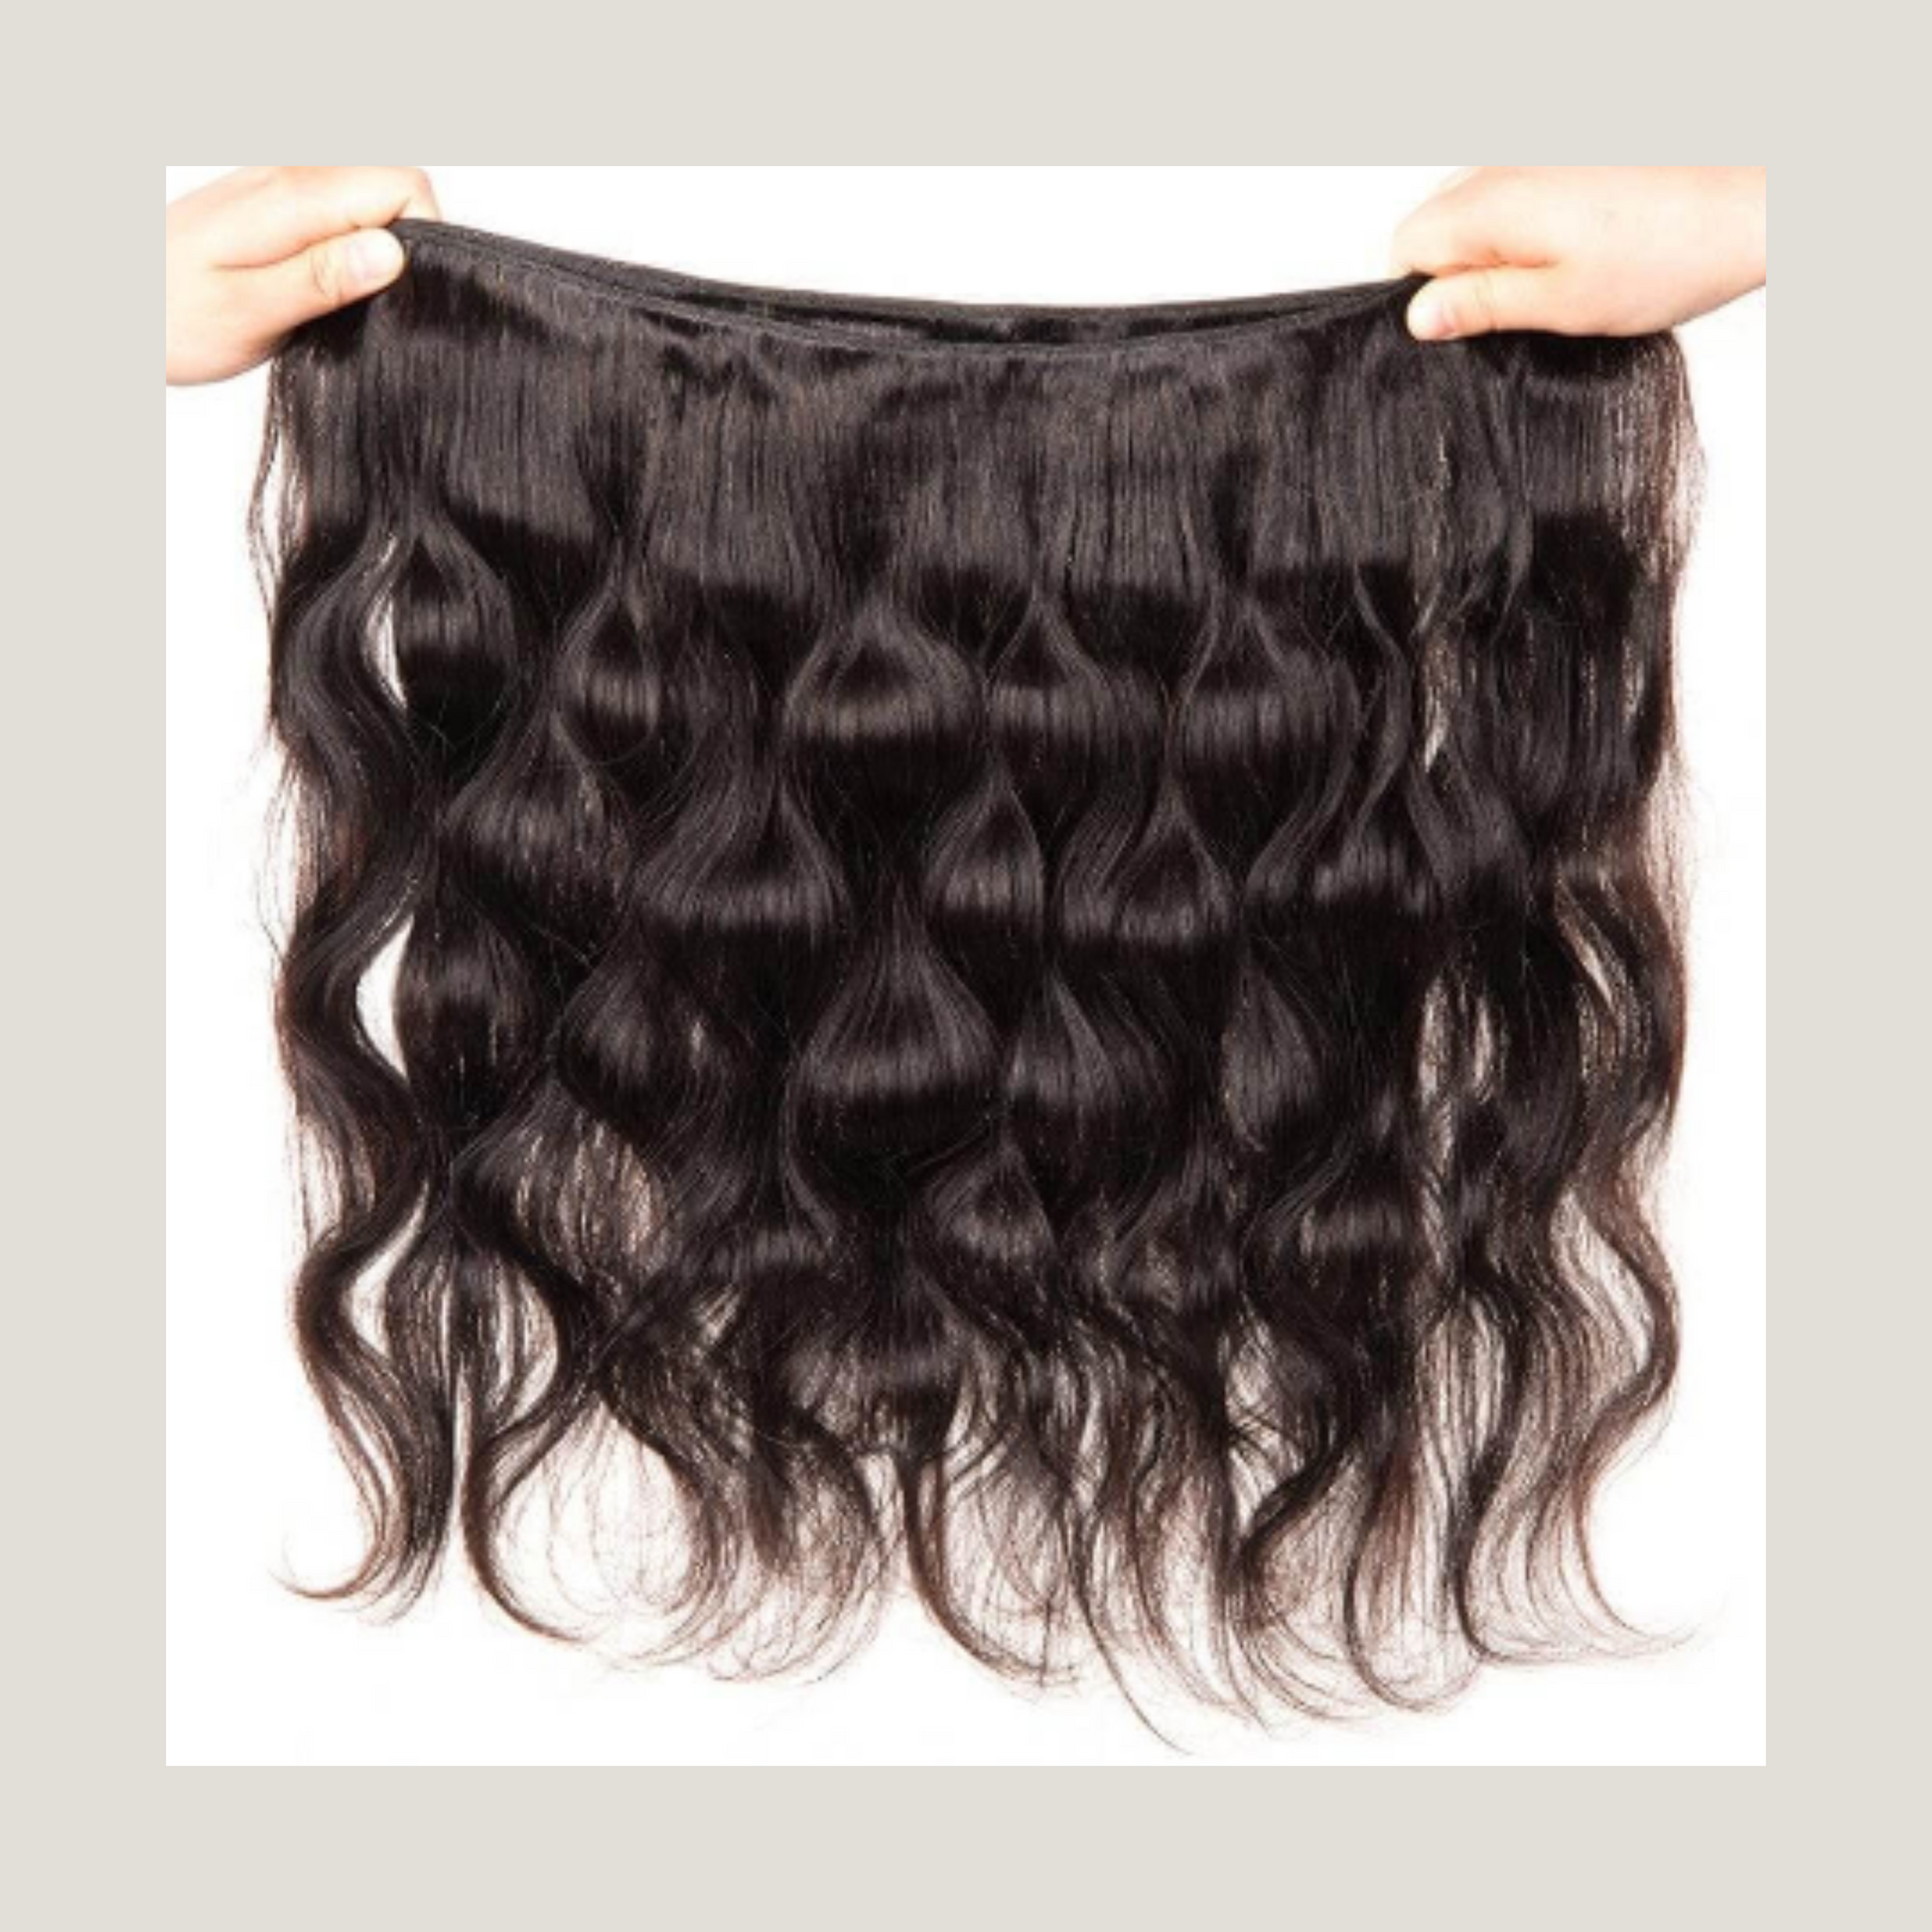 Nadula Wholesale Human Hair Weave Body Wave Virgin Hair 3 Bundles